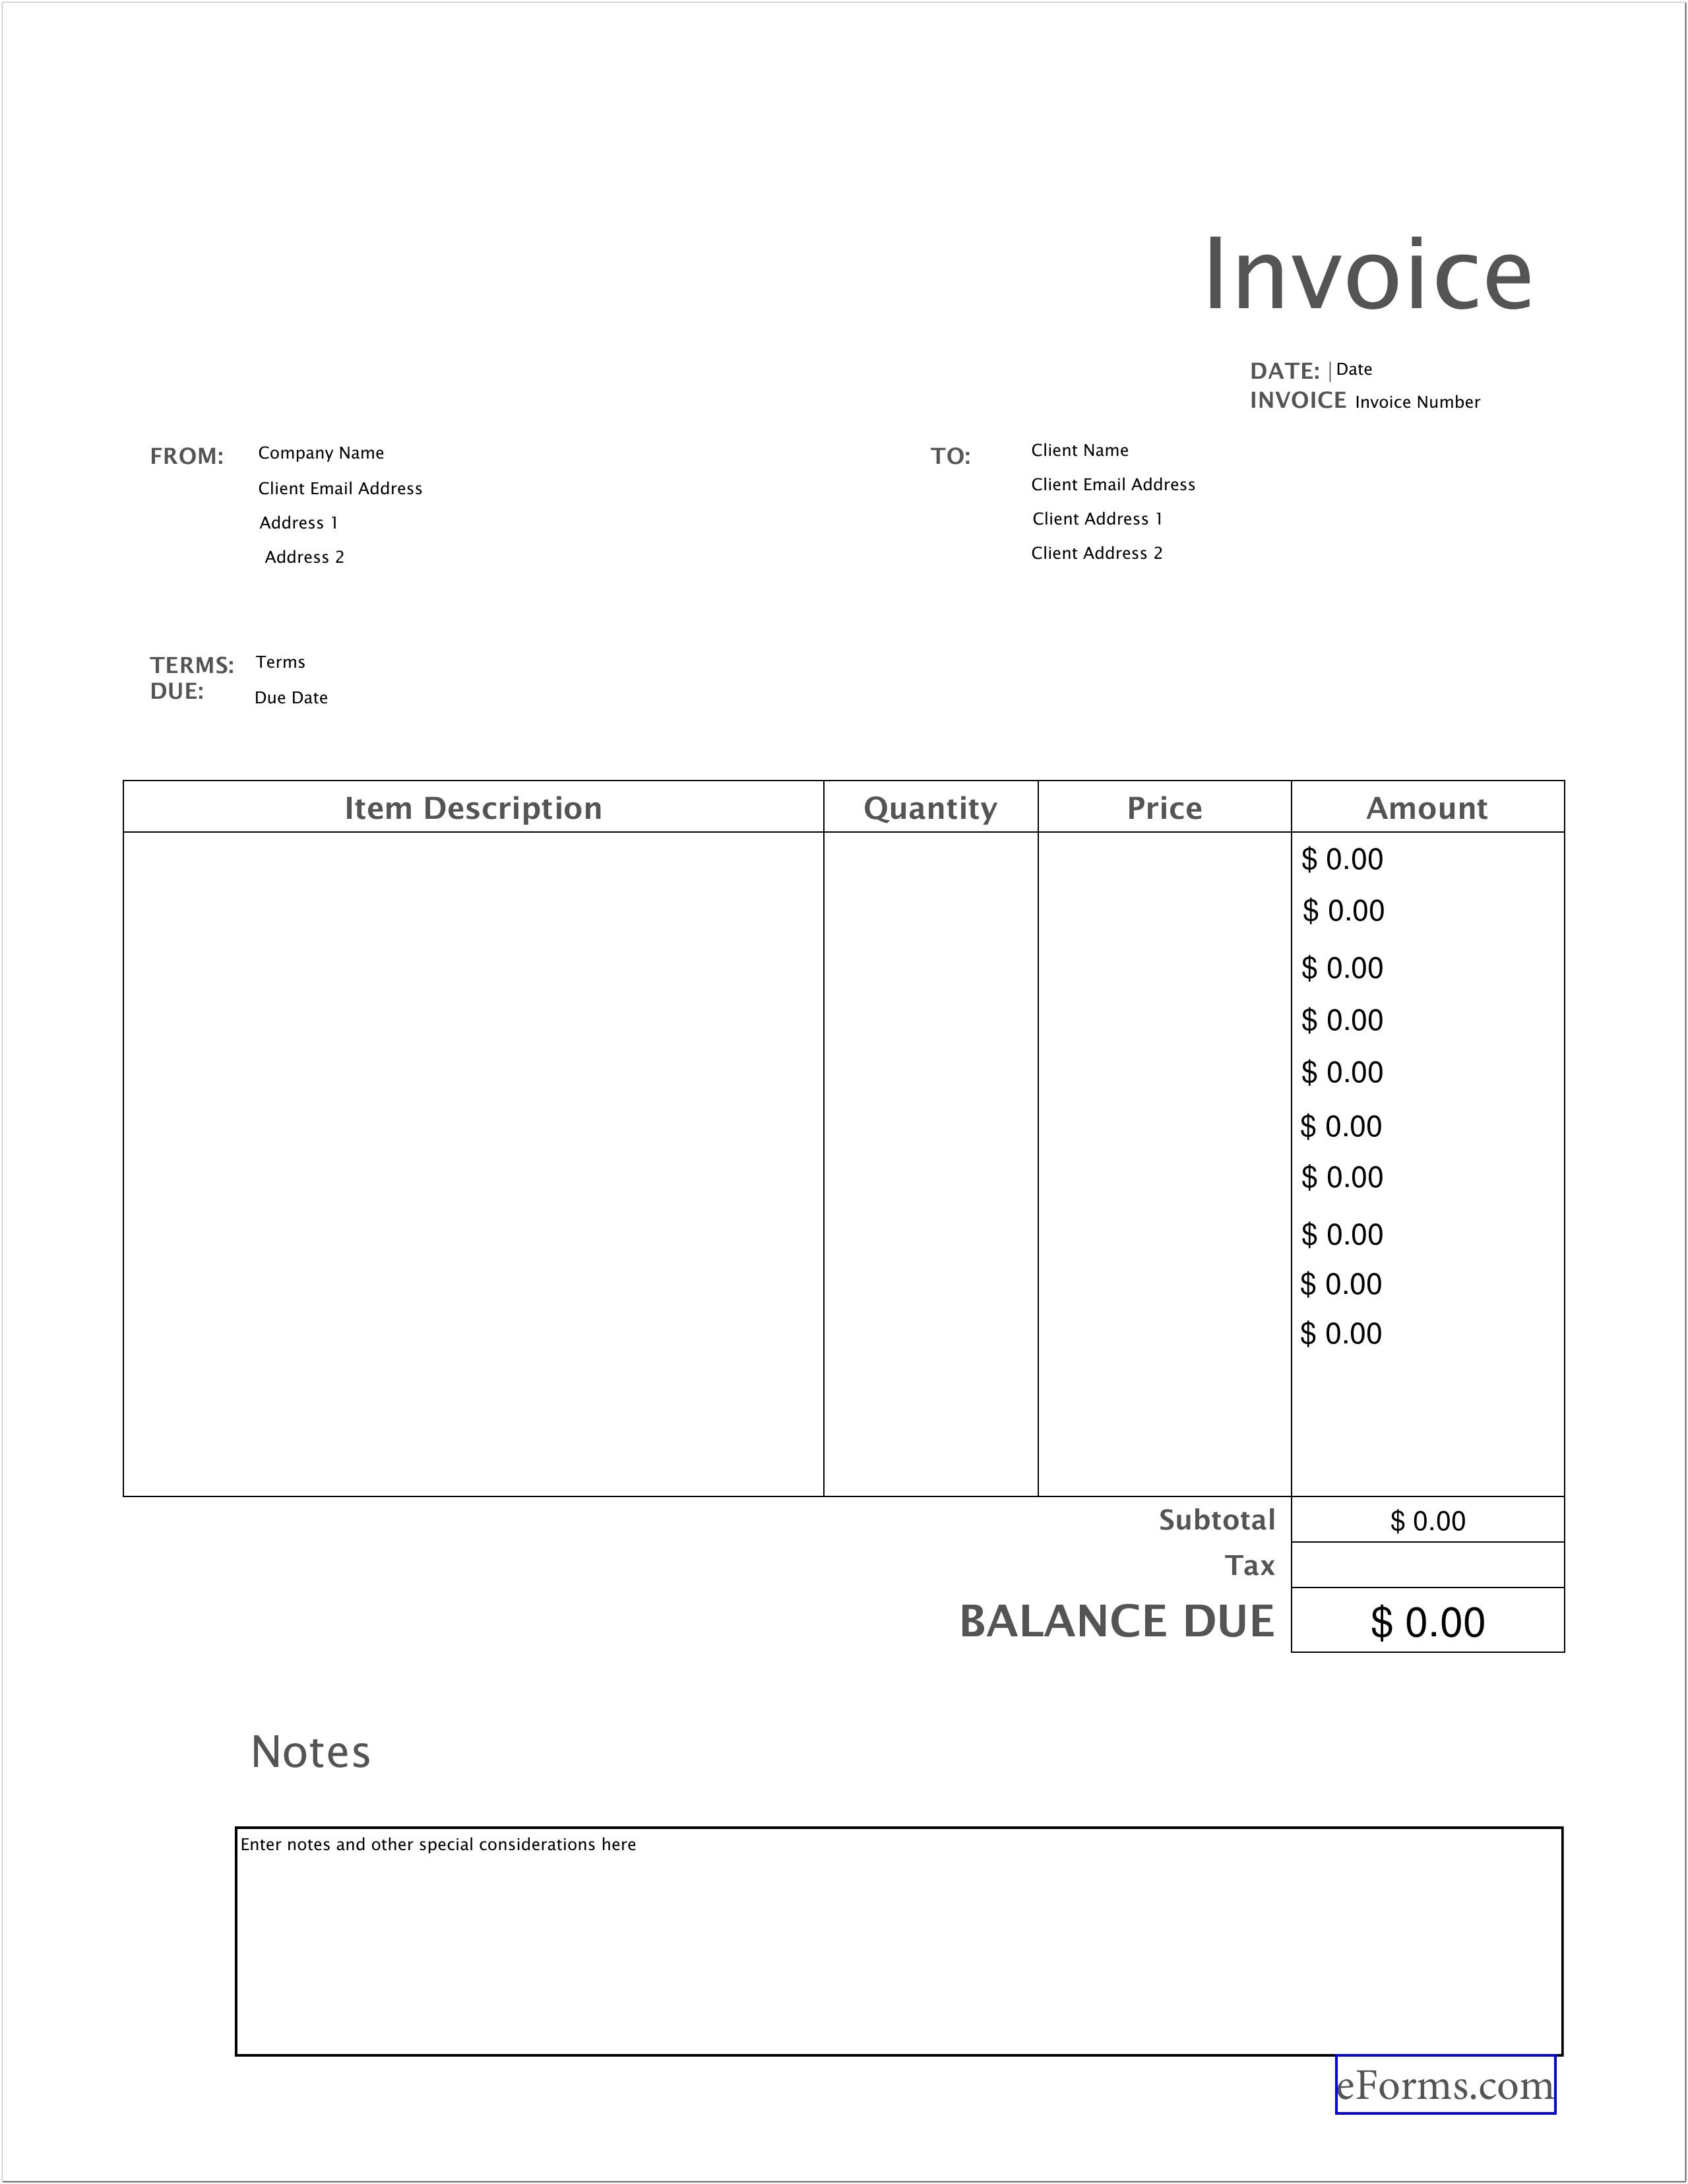 Blank Invoice Templates Free